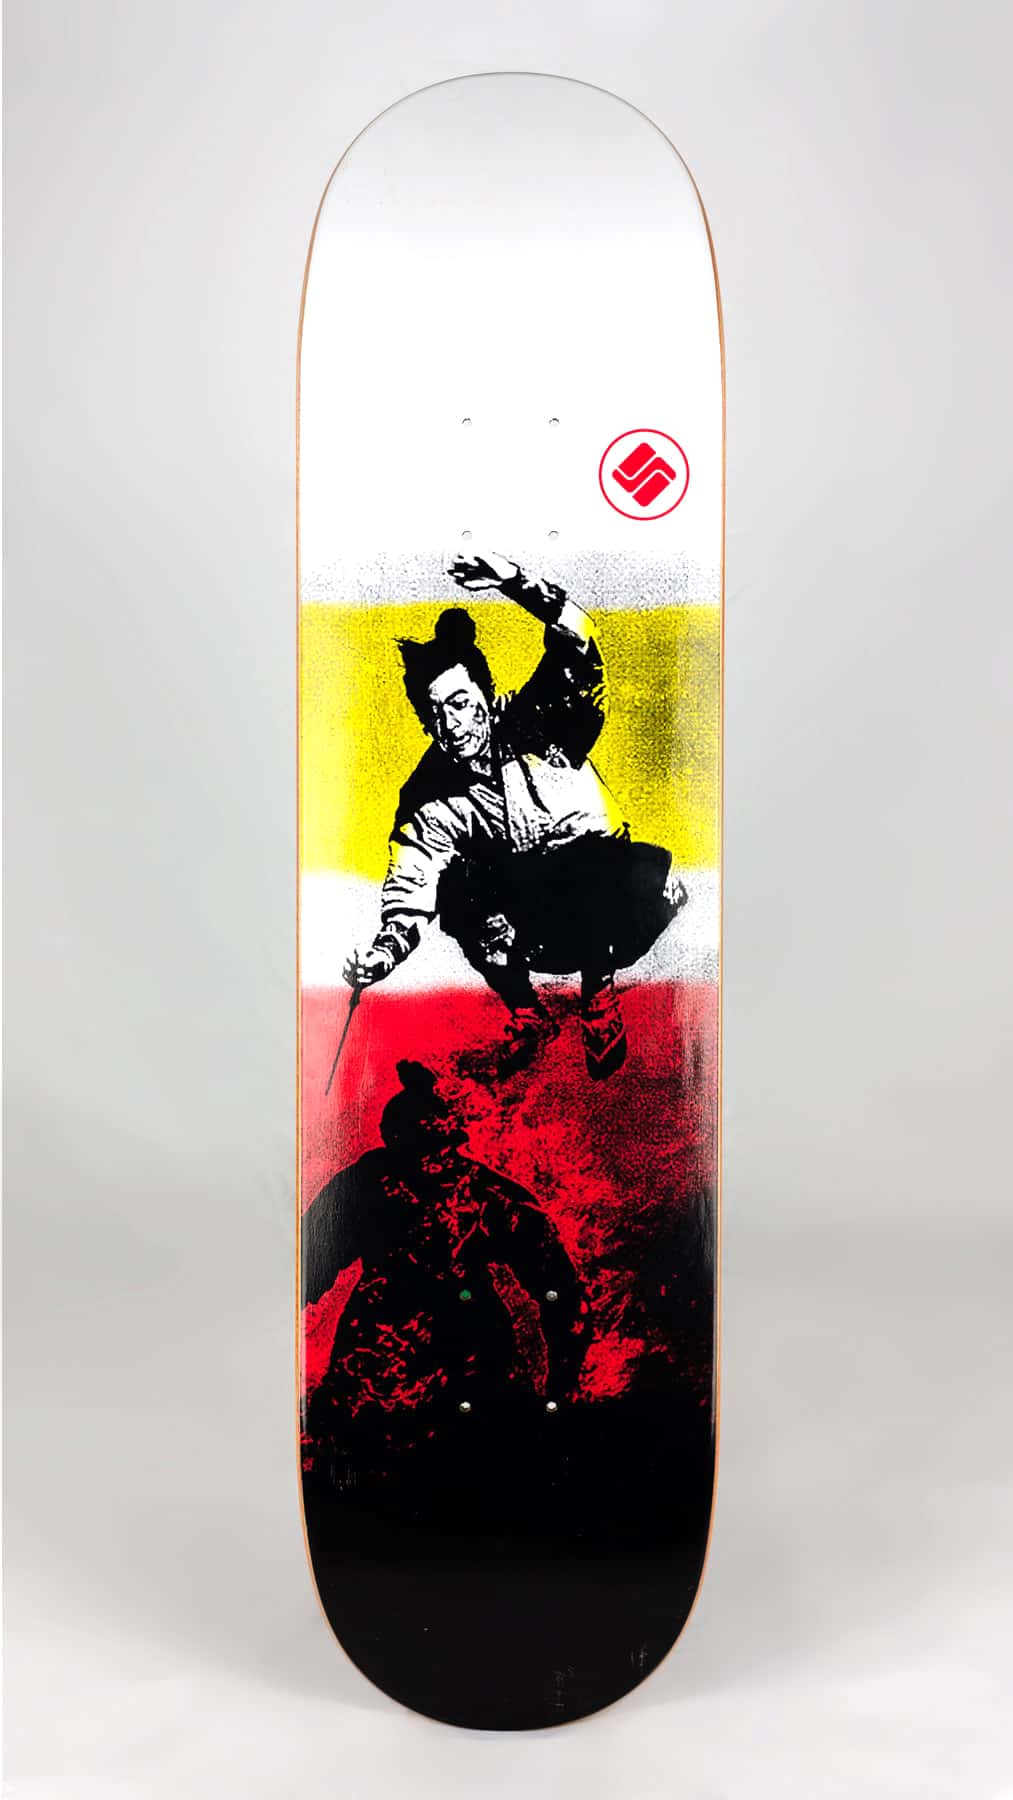 old samurai movie inspired skateboard graphic by chris morgan creative